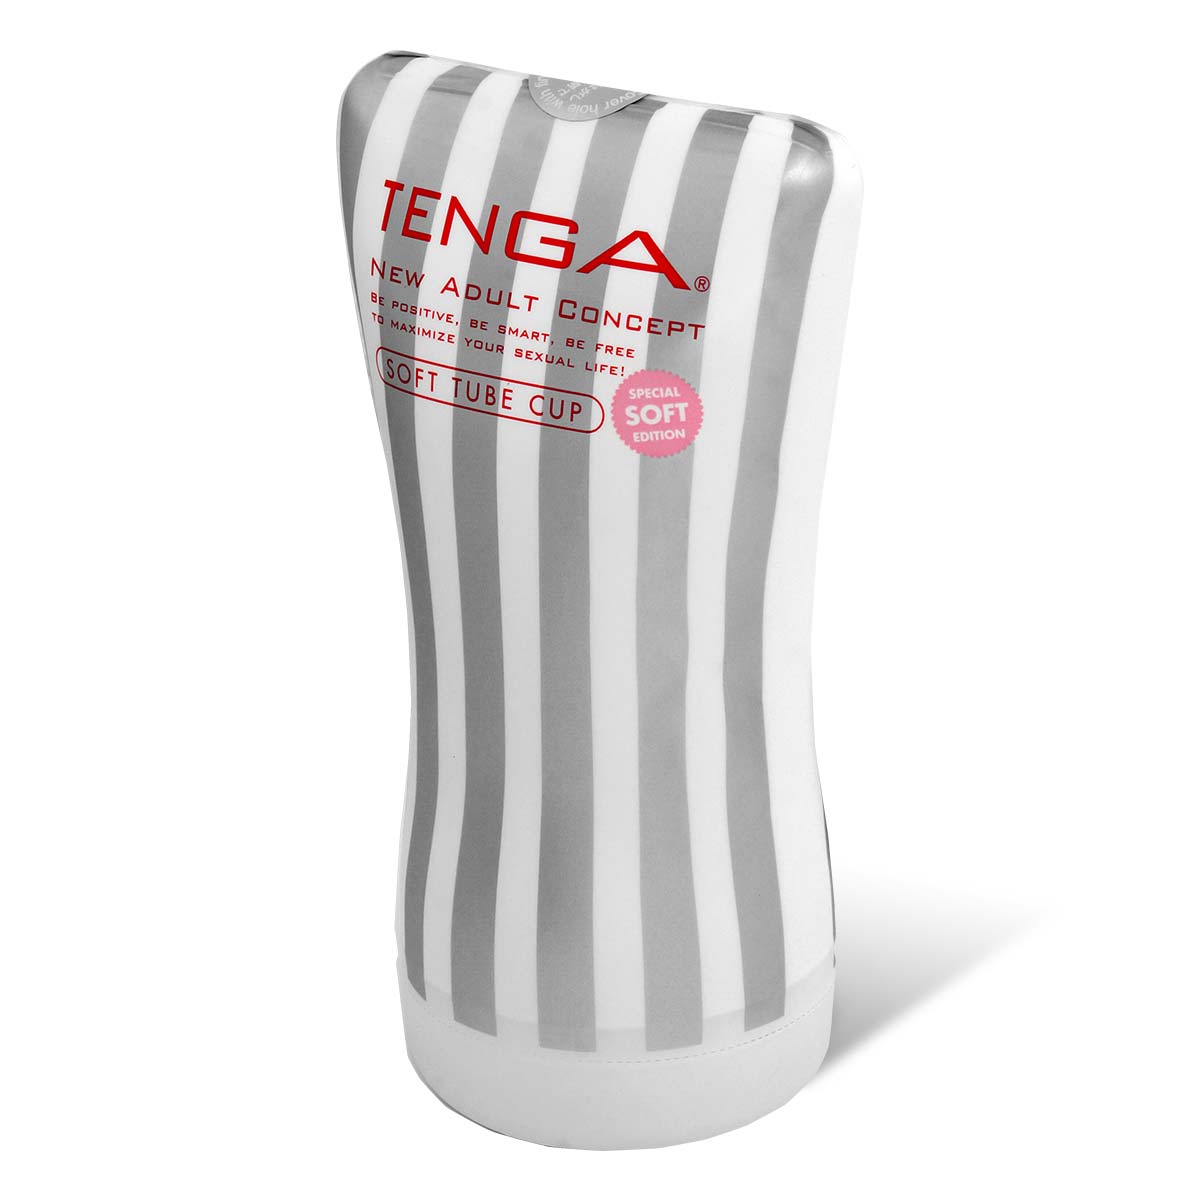 TENGA SOFT TUBE CUP 柔软型-p_1